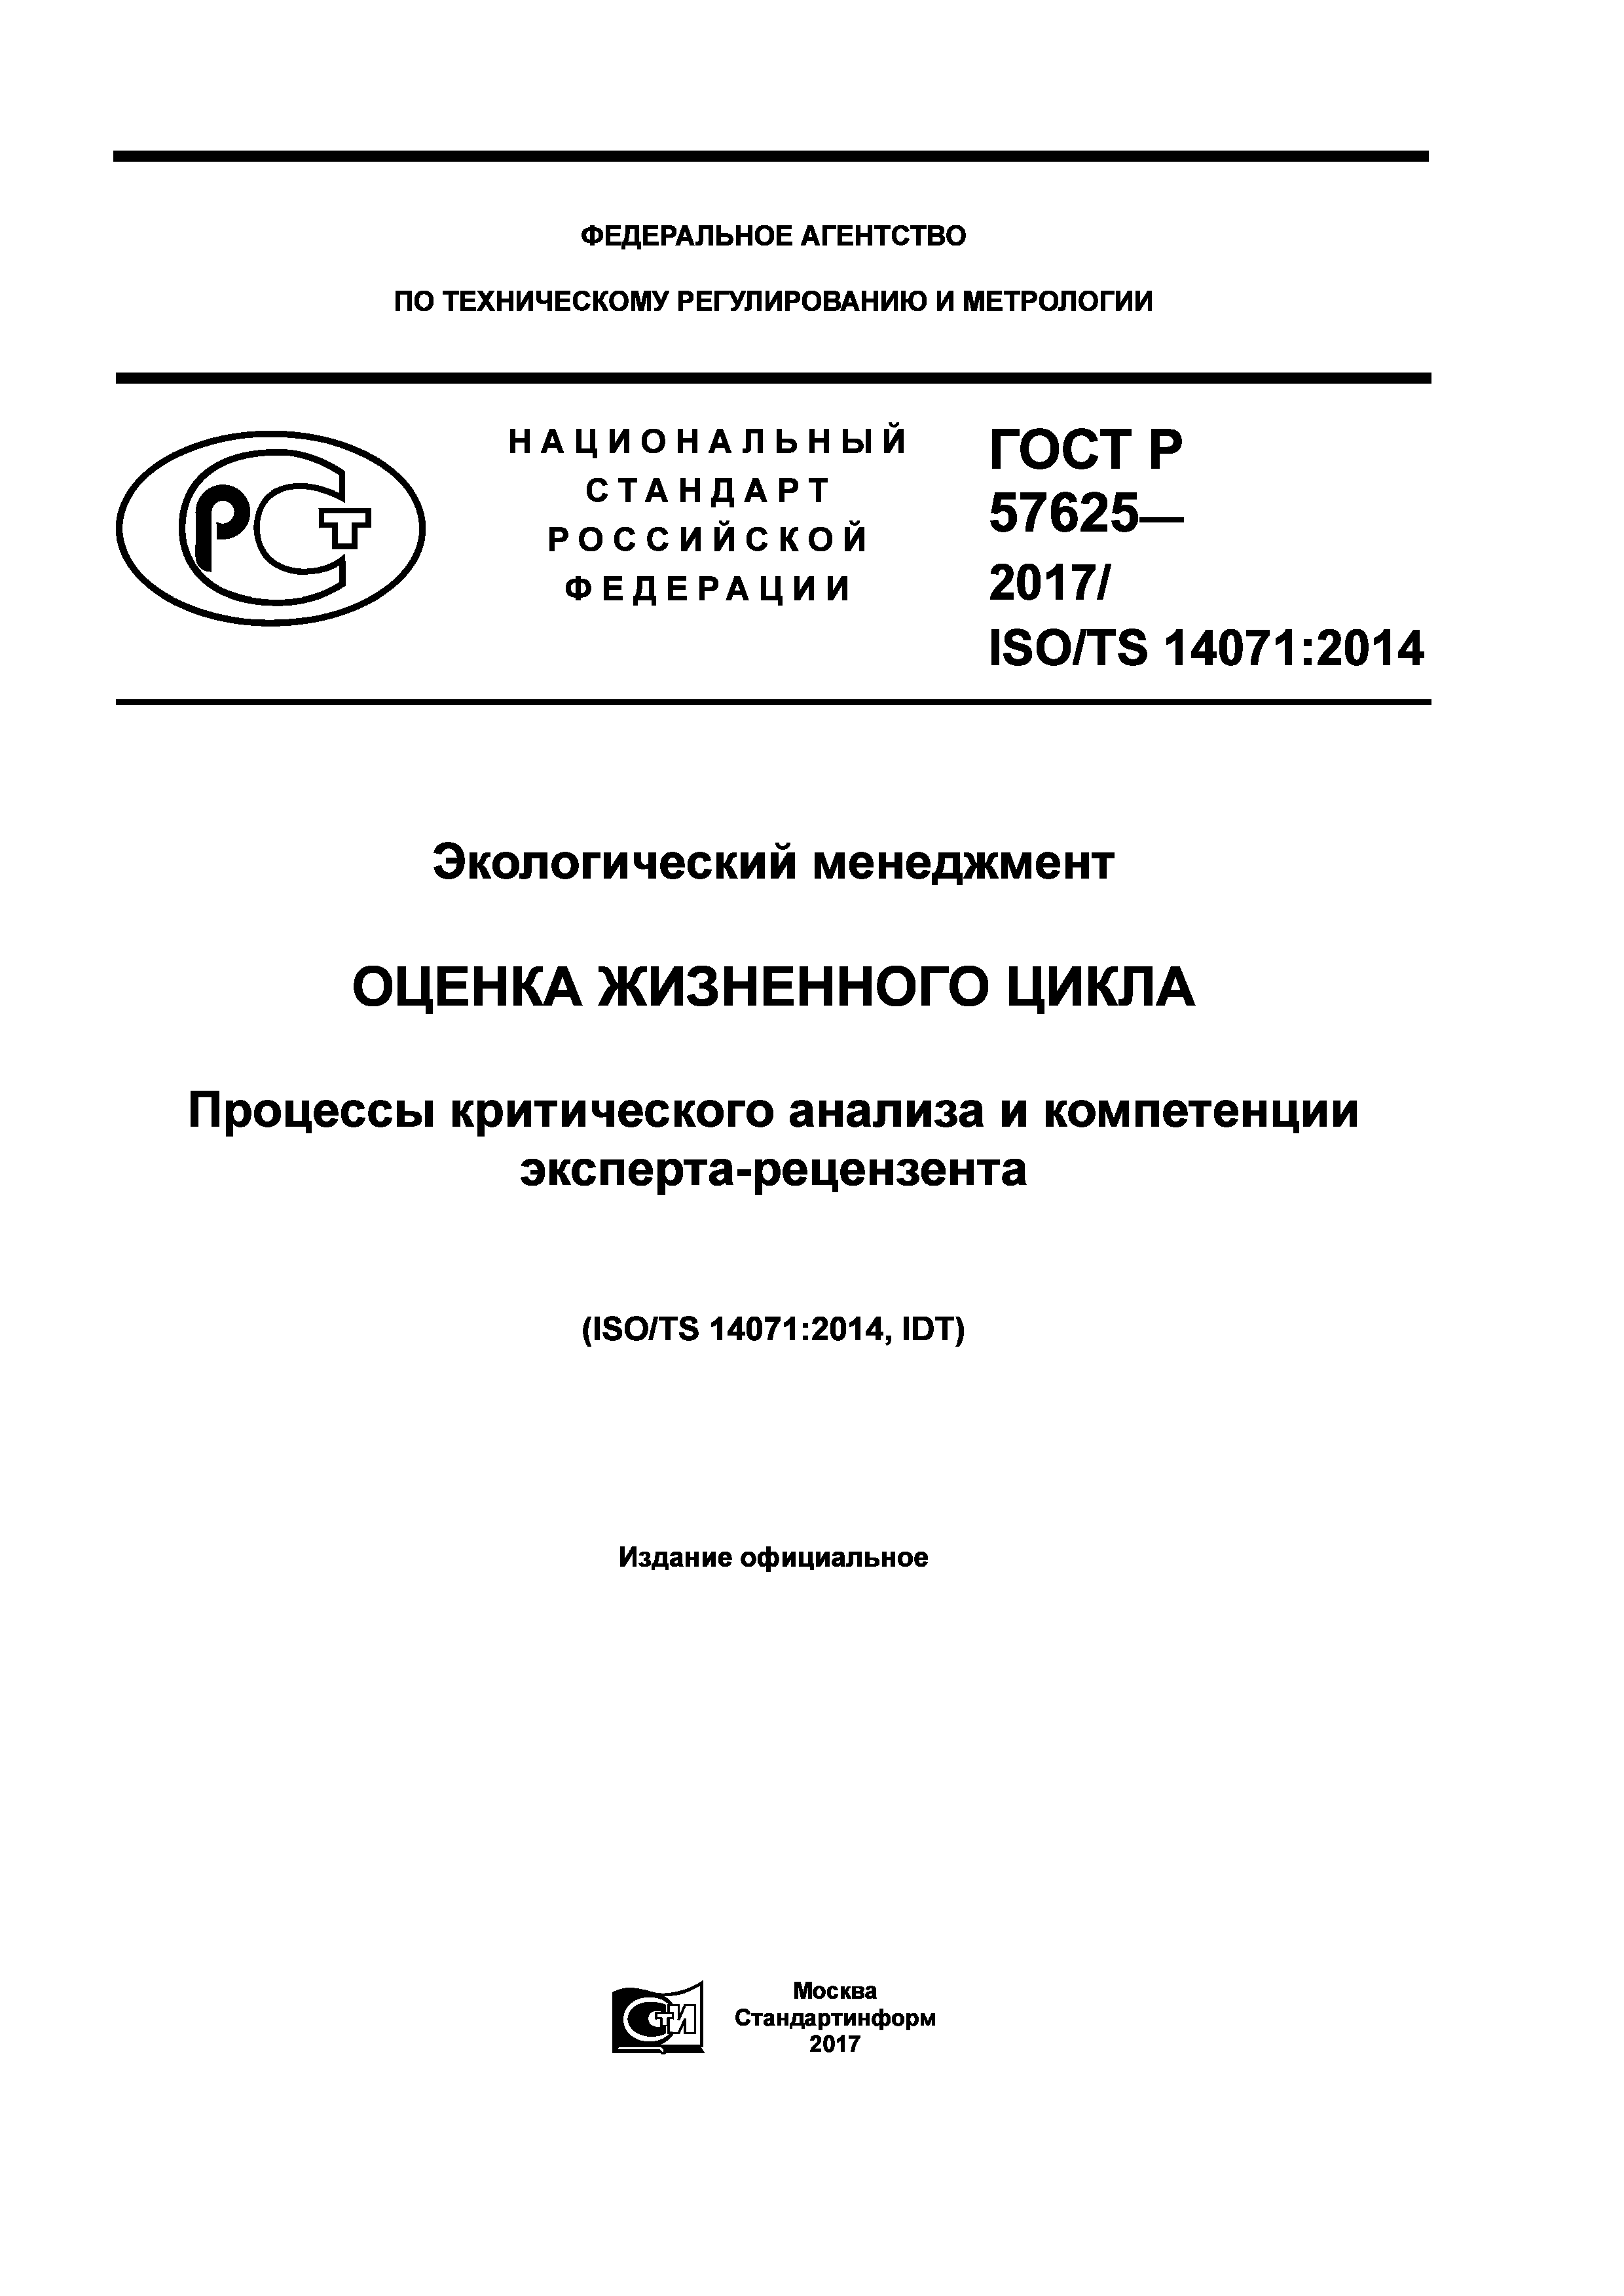 ГОСТ Р 57625-2017